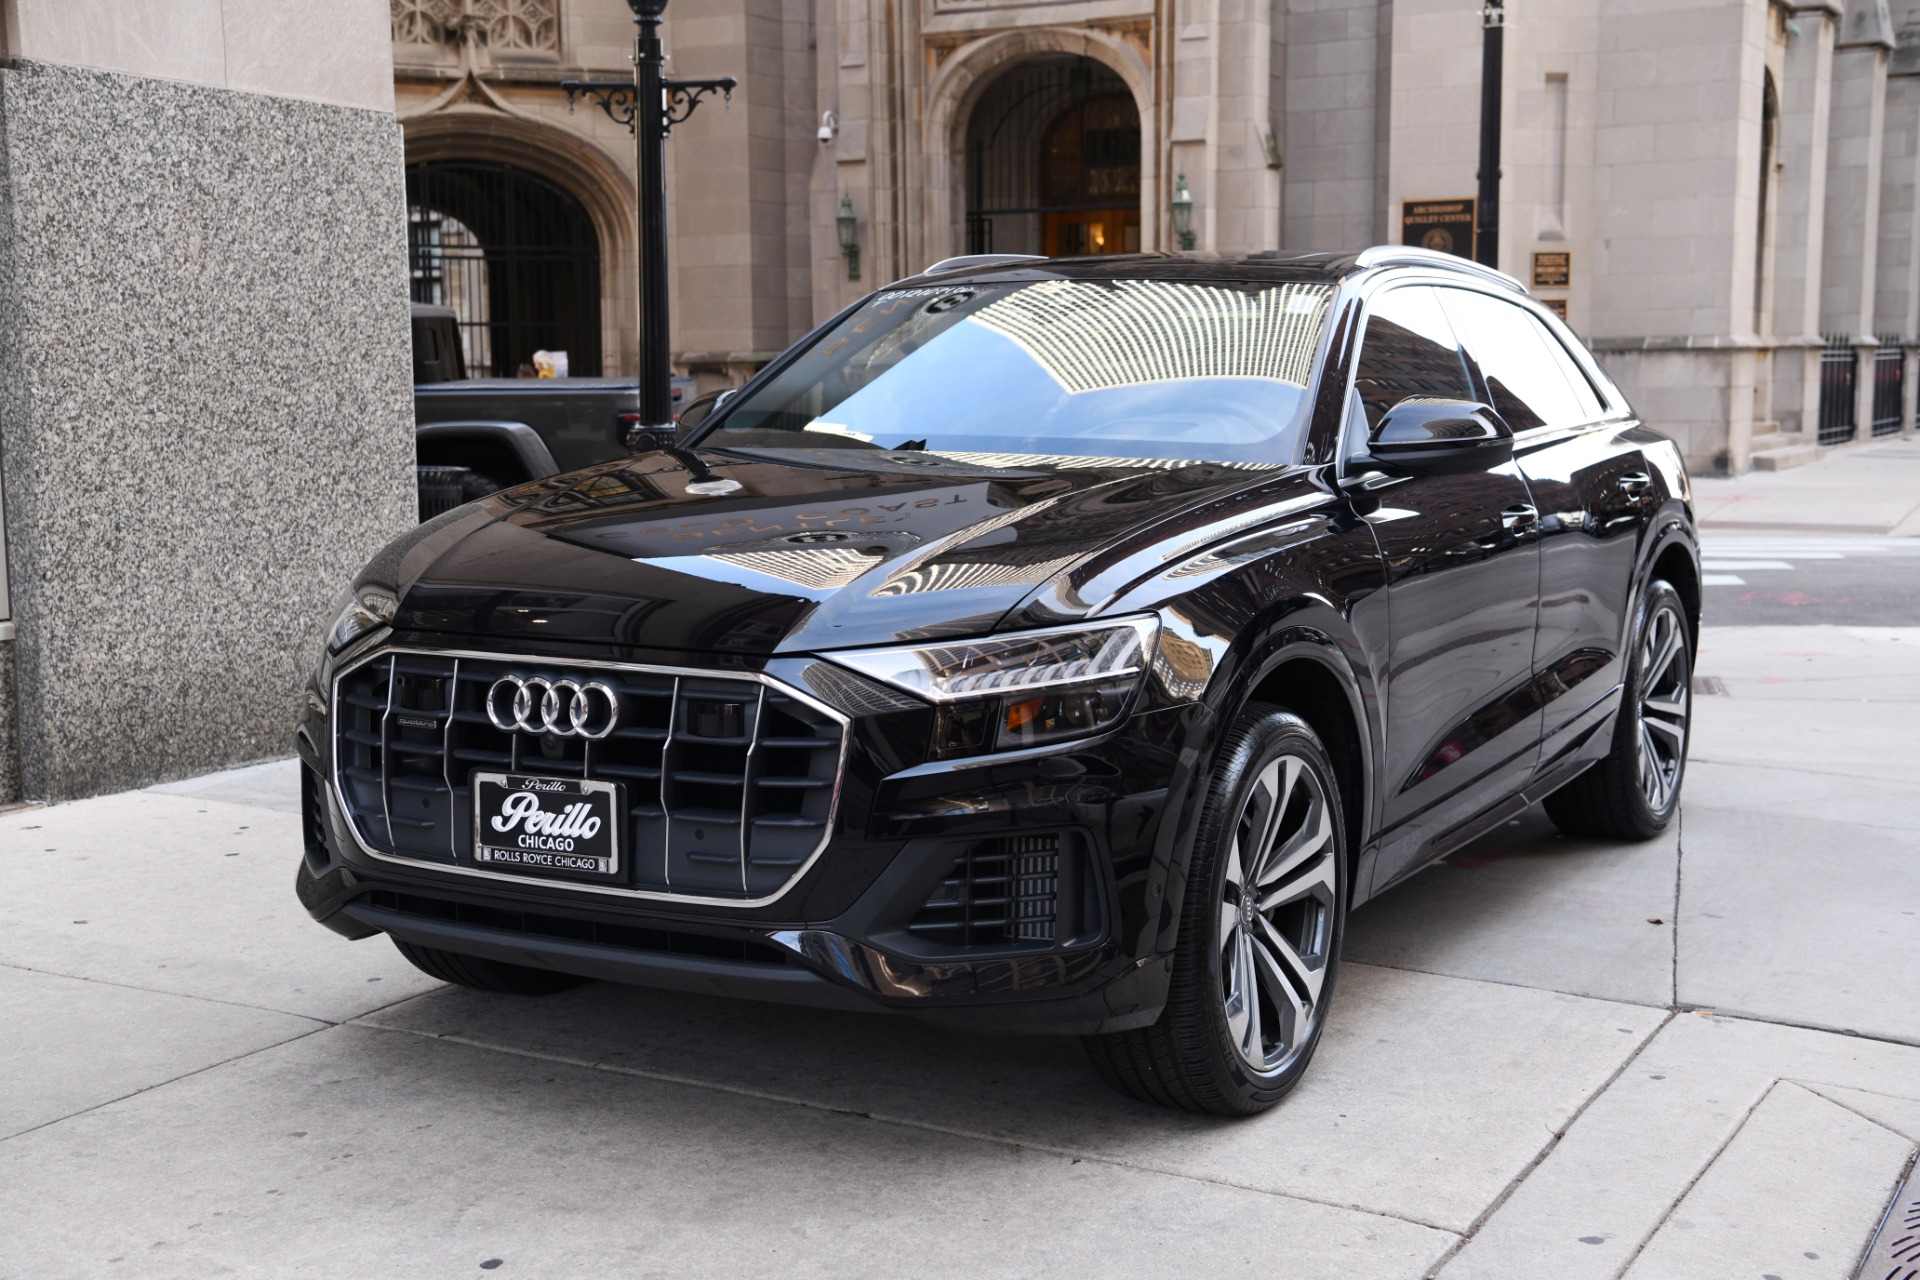 Used 2019 Audi Q8 3.0T quattro Prestige | Chicago, IL